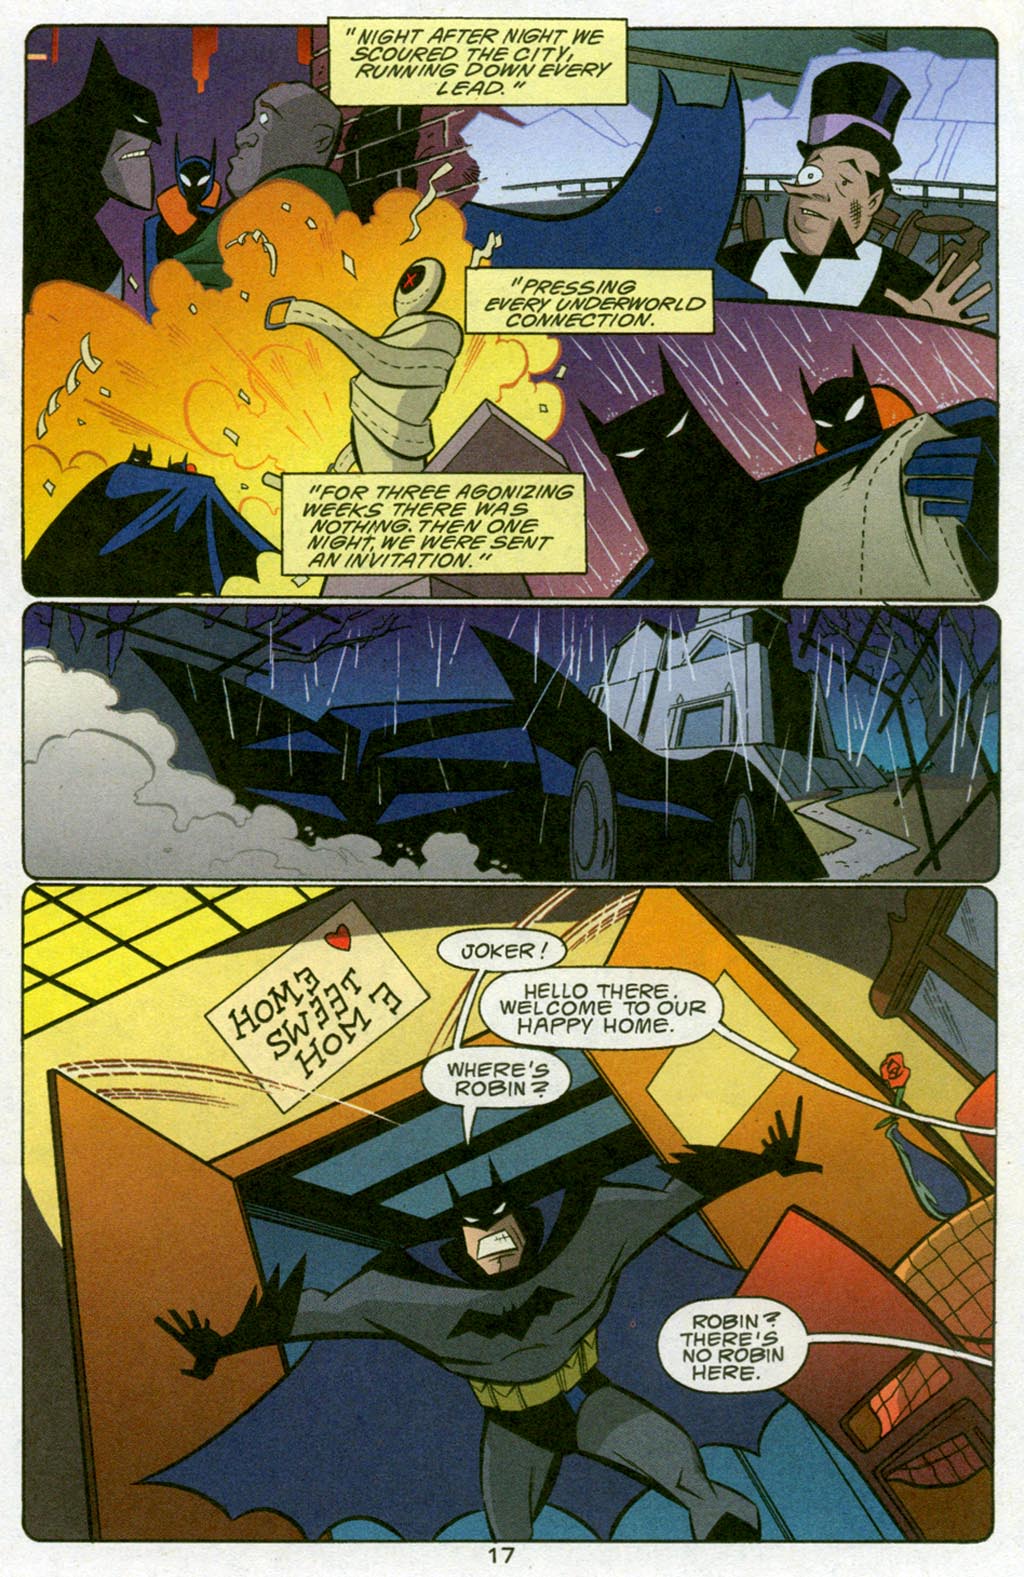 Read Batman Beyond: Return of the Joker Issue #Full Online Page 17